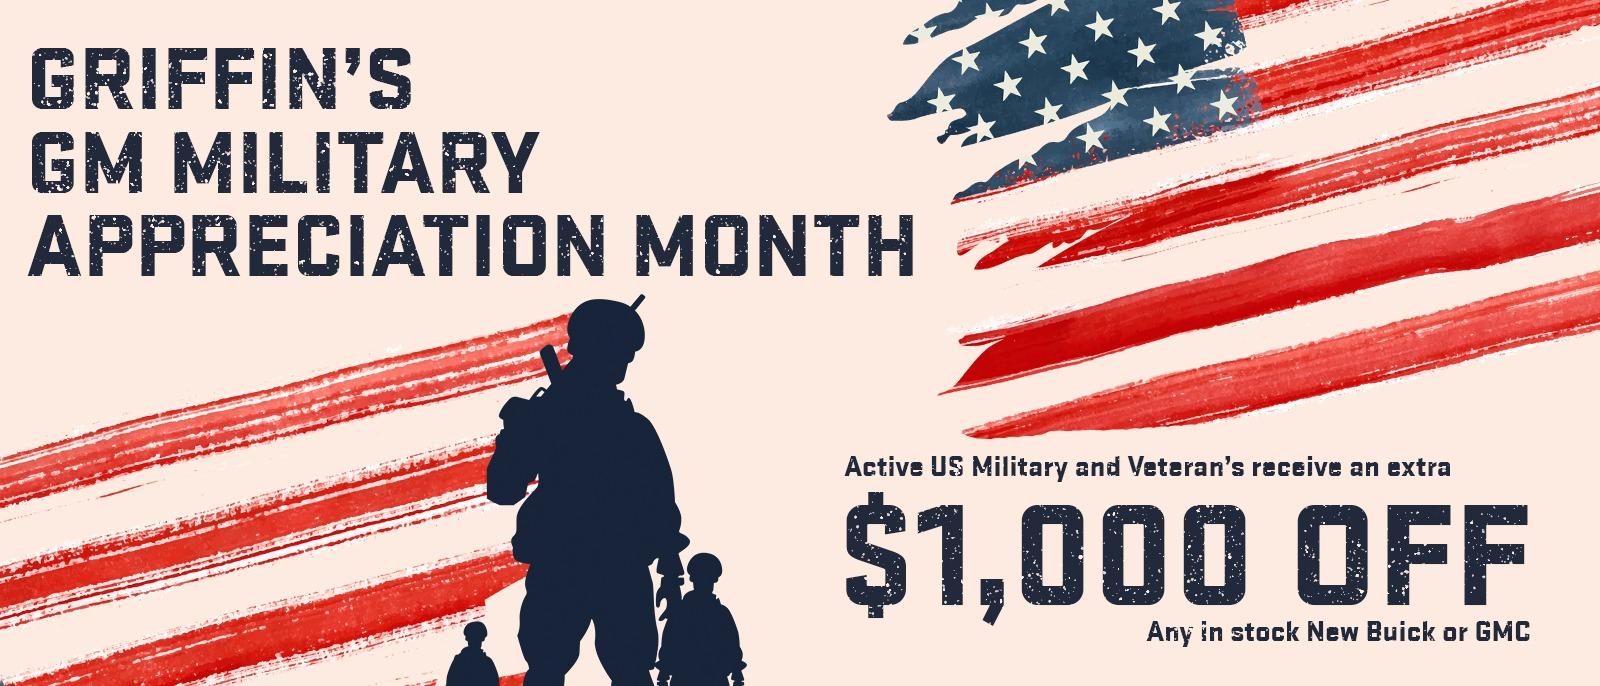 Military Appreciation month